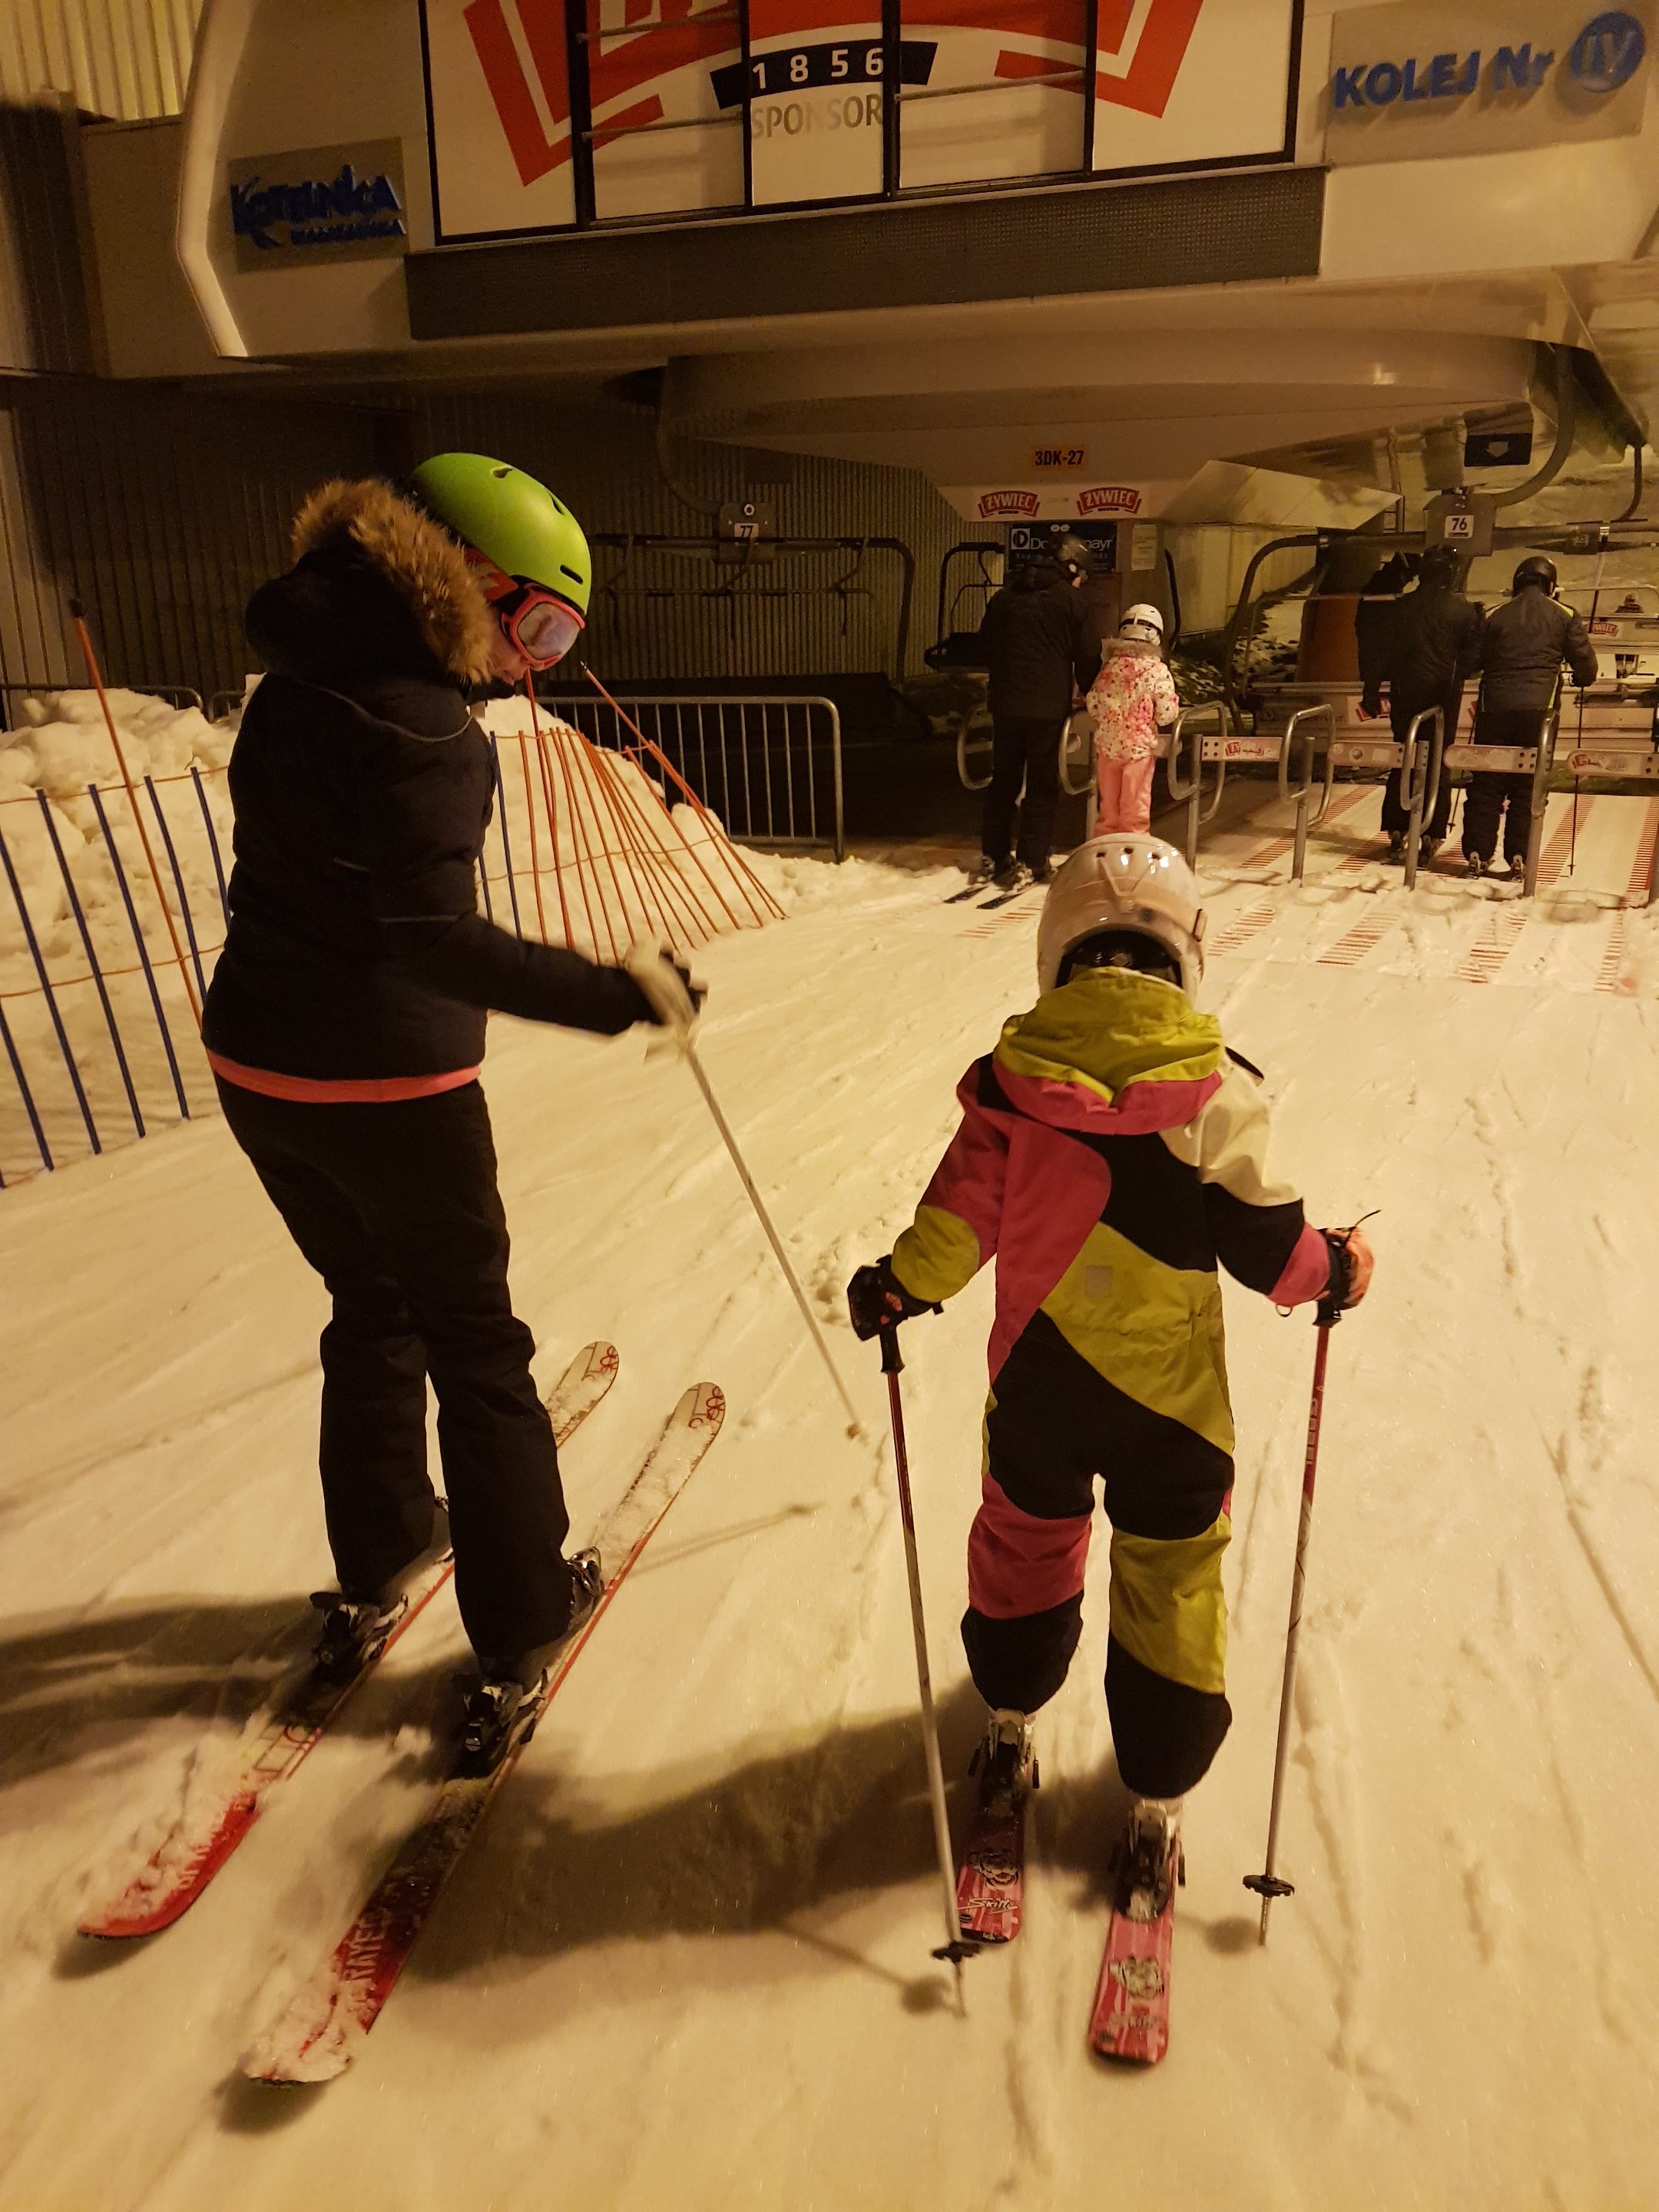 Family skiing in Bialka Tatrzanska, Poland